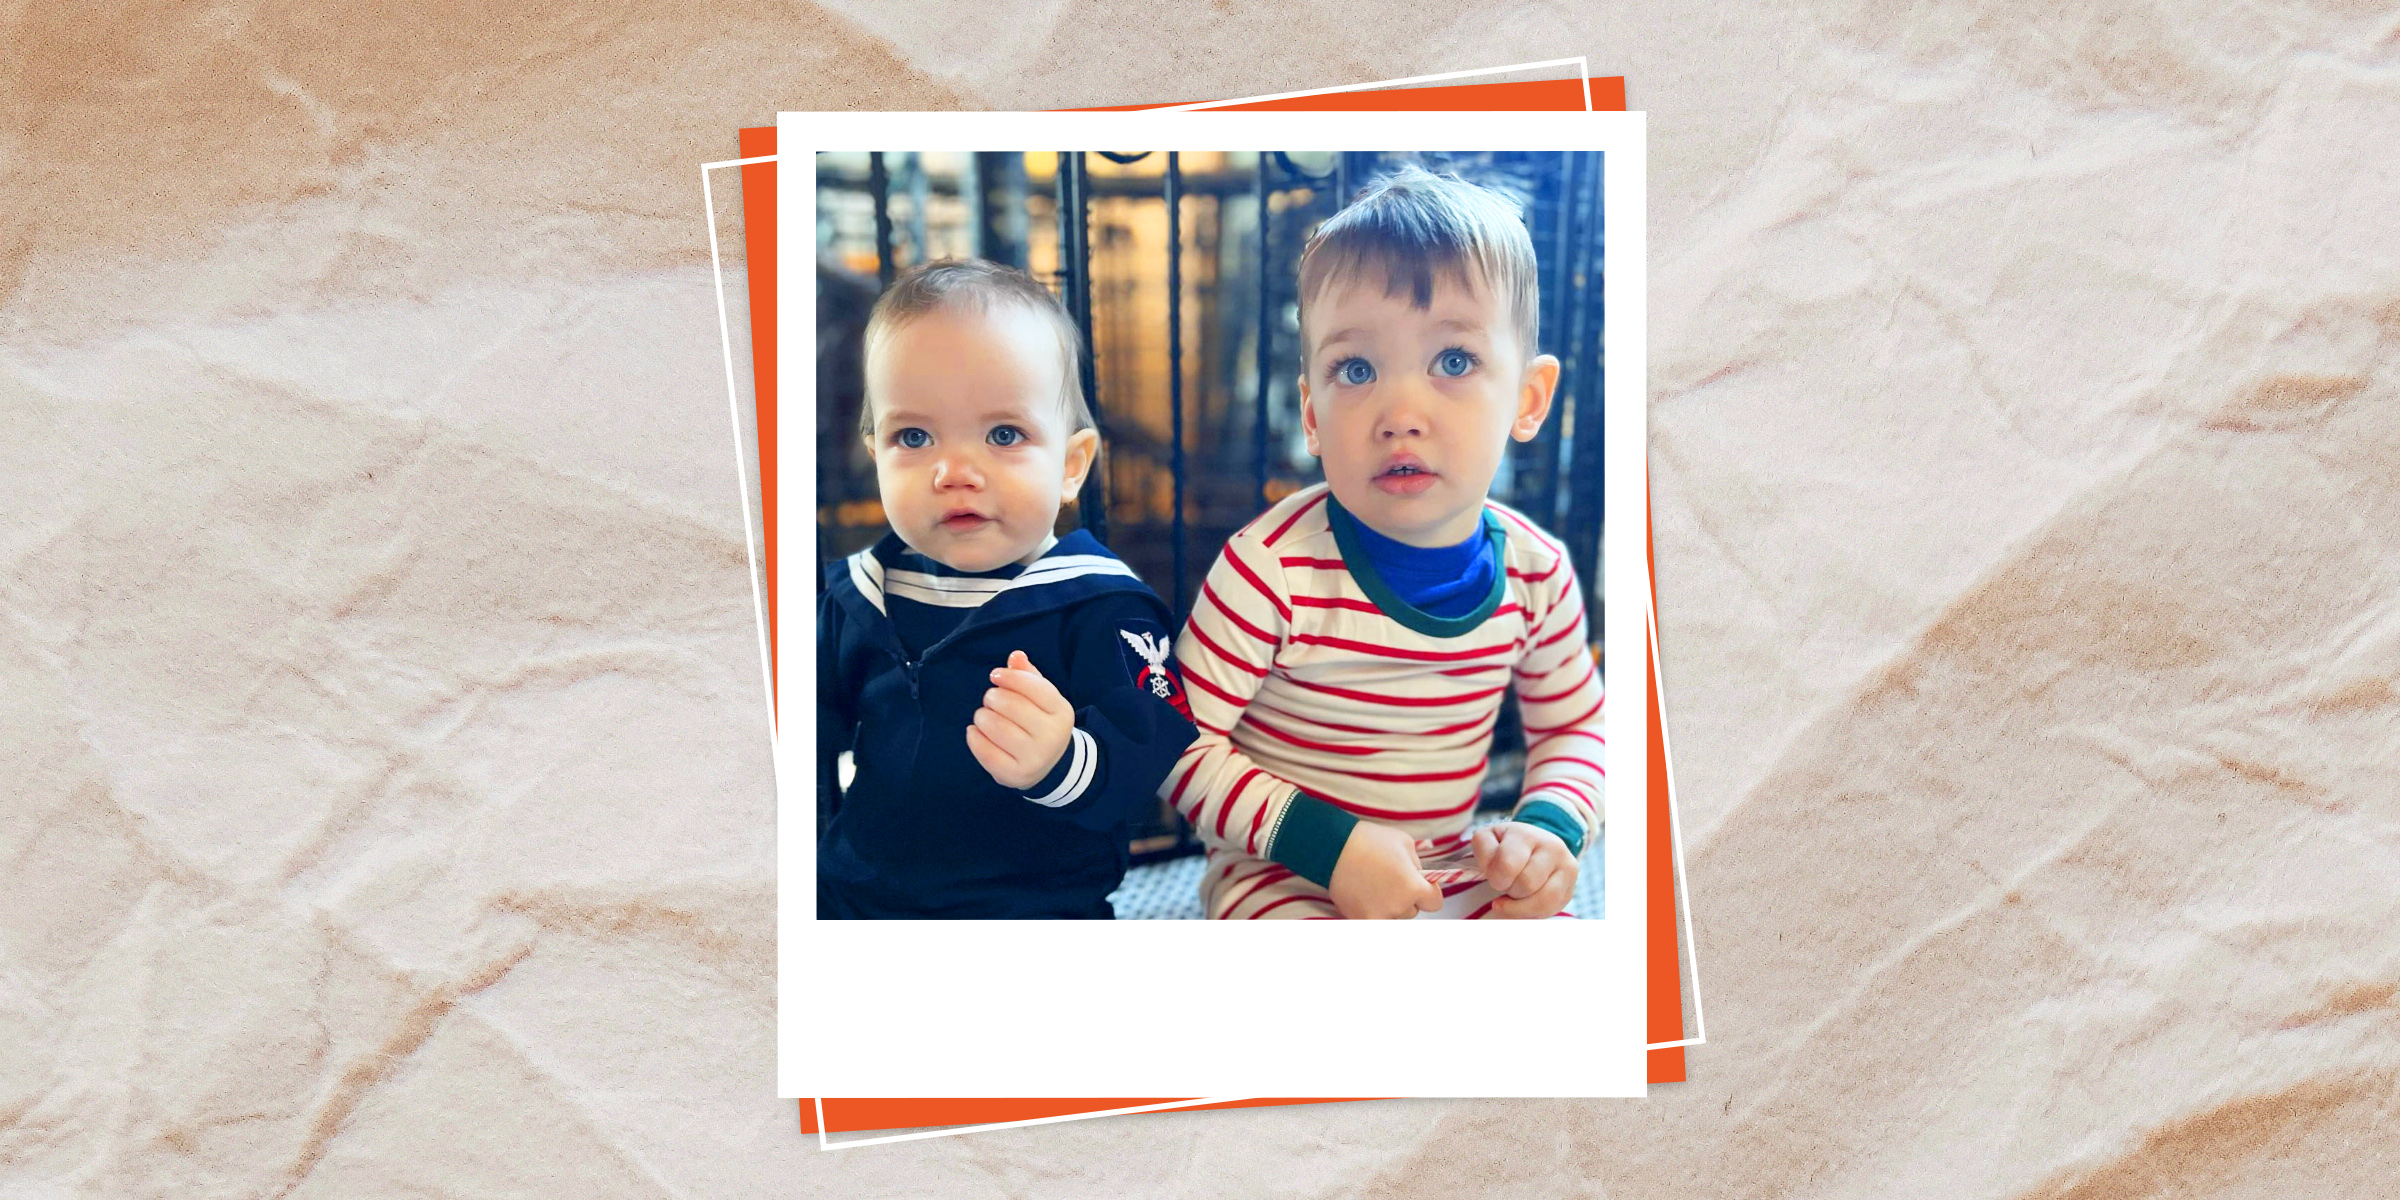 Anderson Cooper Kinder Wyatt und Sebastian | Quelle: Instagram.om/andersoncooper